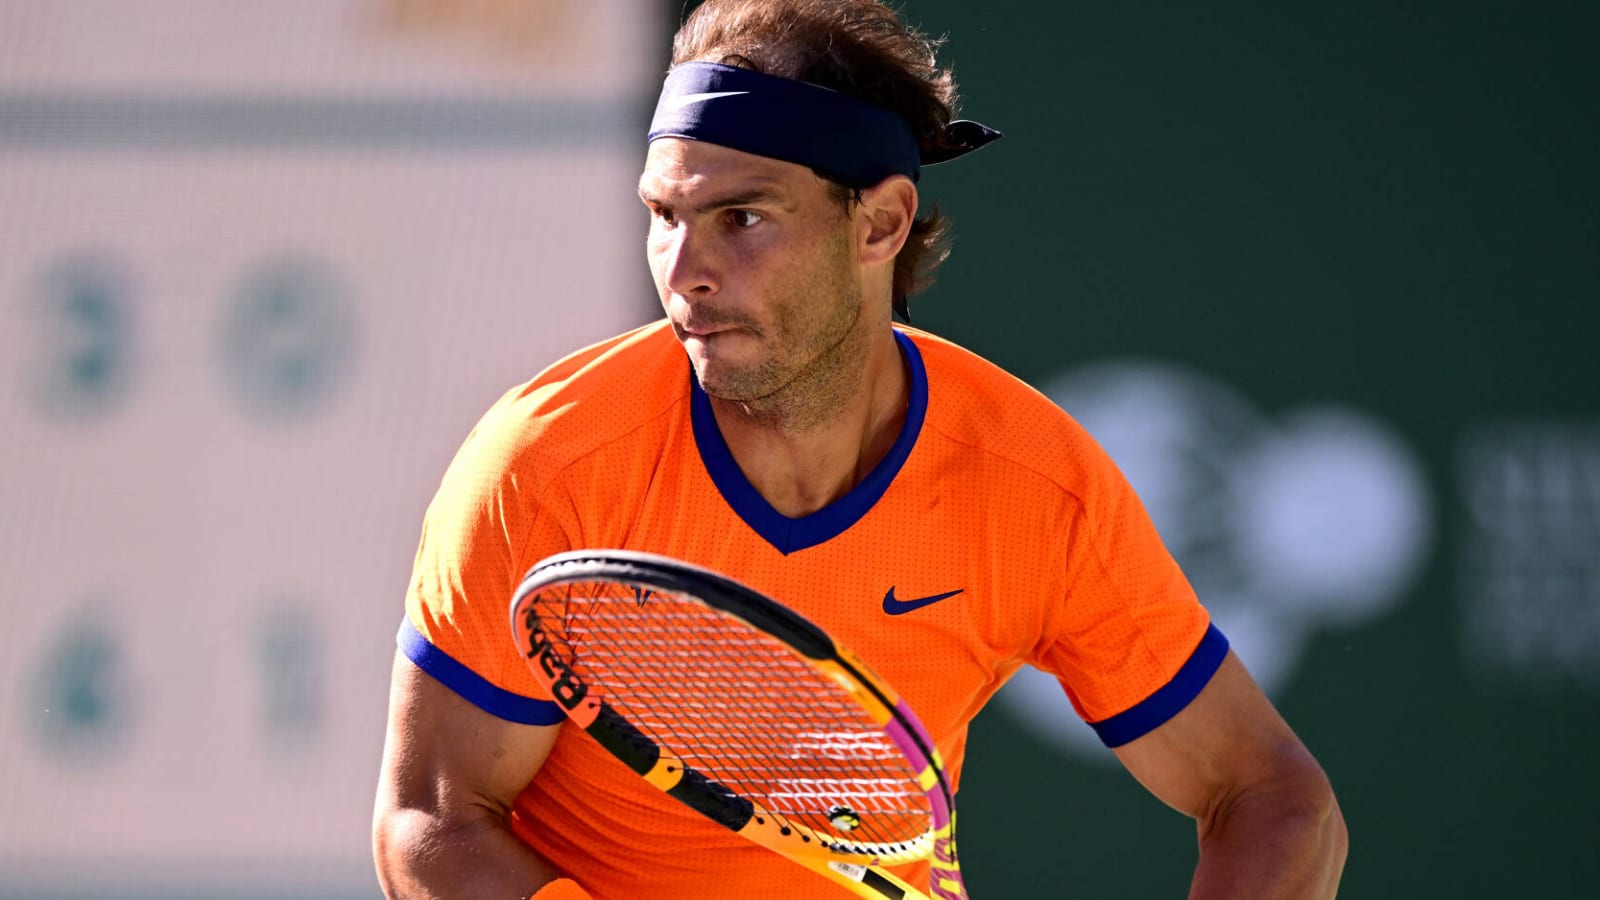 Rafael Nadal among pros criticizing Wimbledon for Russia ban